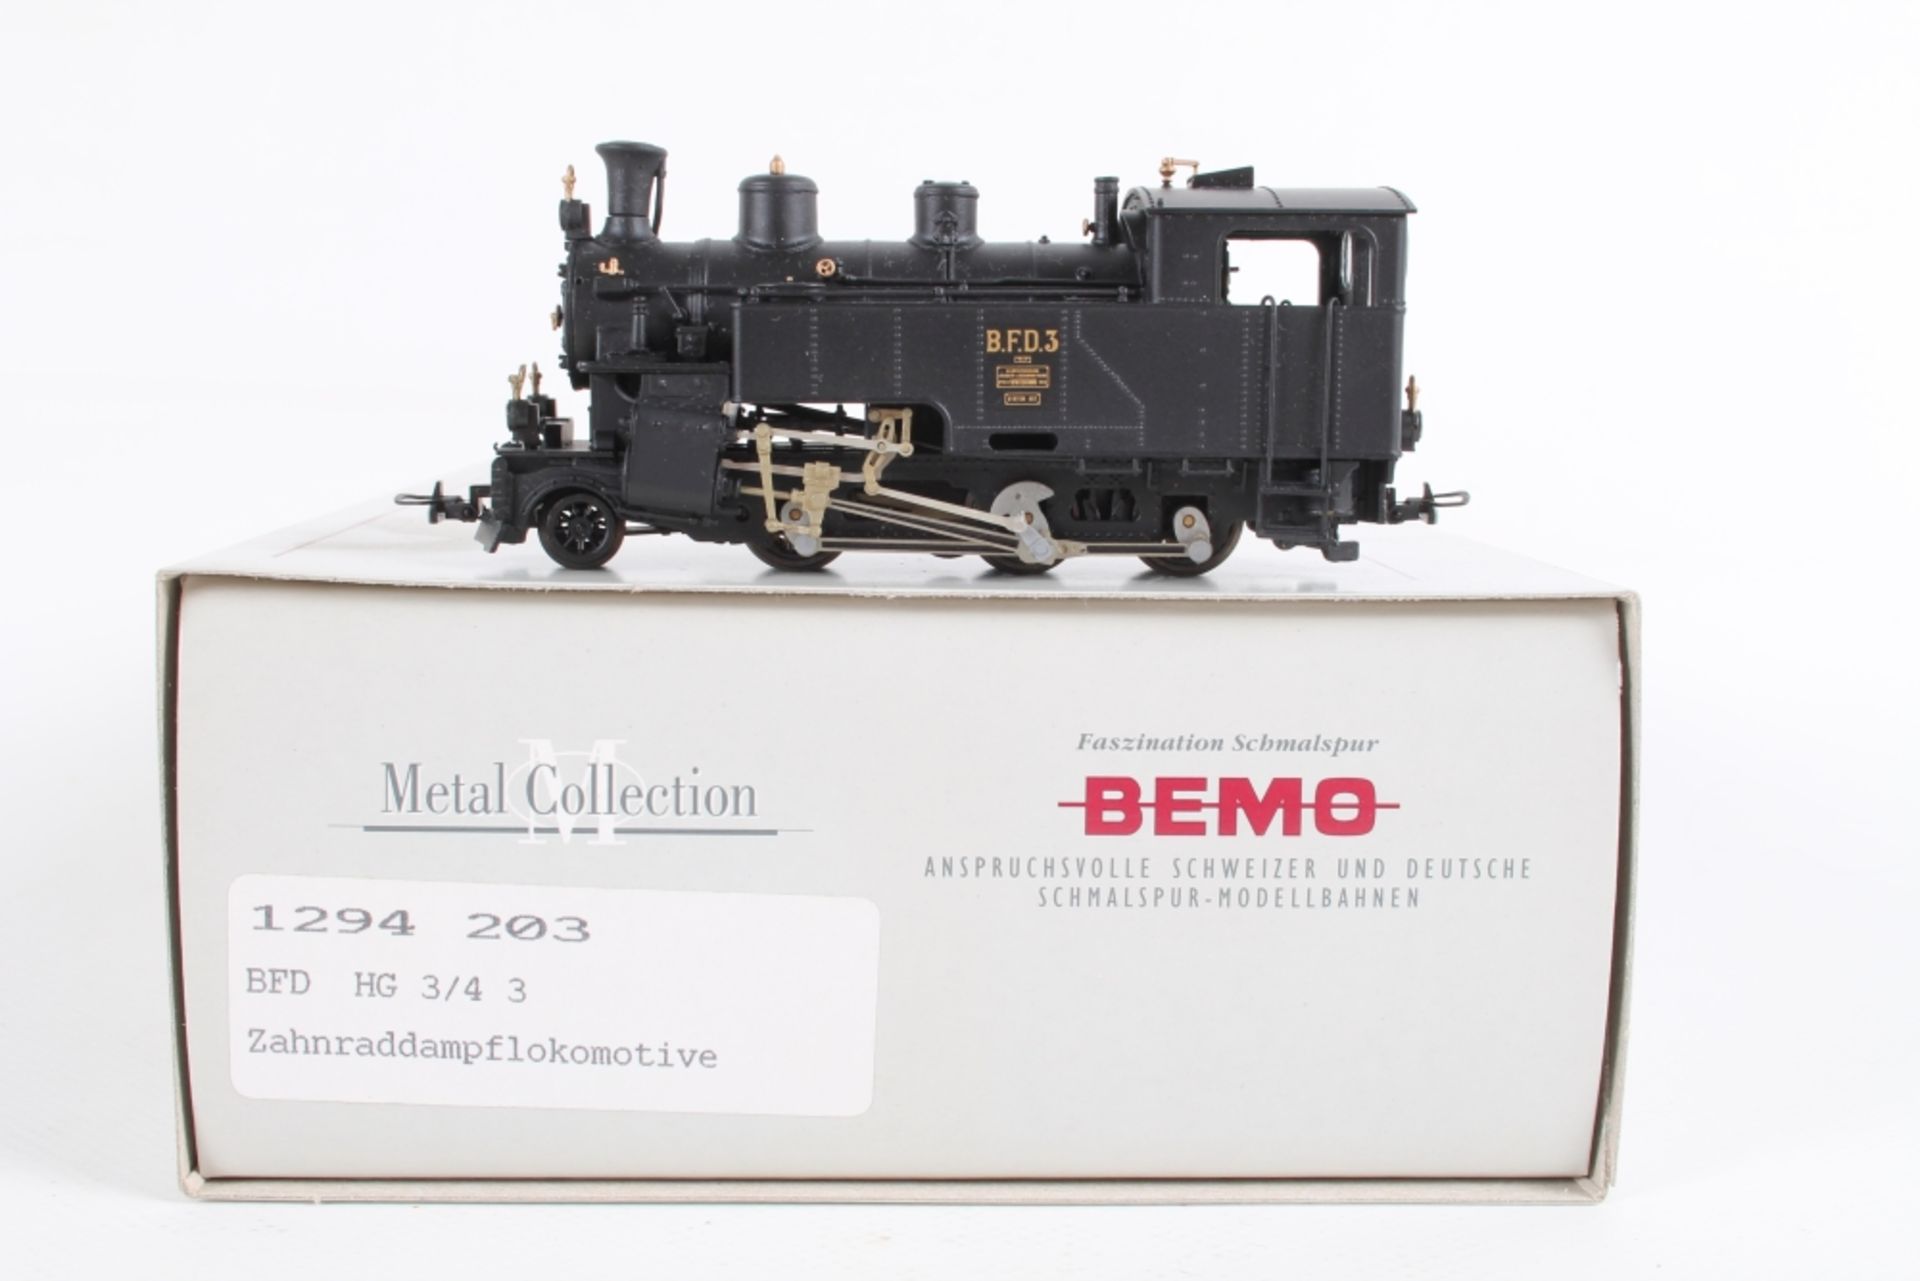 Bemo Metal Collection, 1294 203 - Bild 2 aus 2